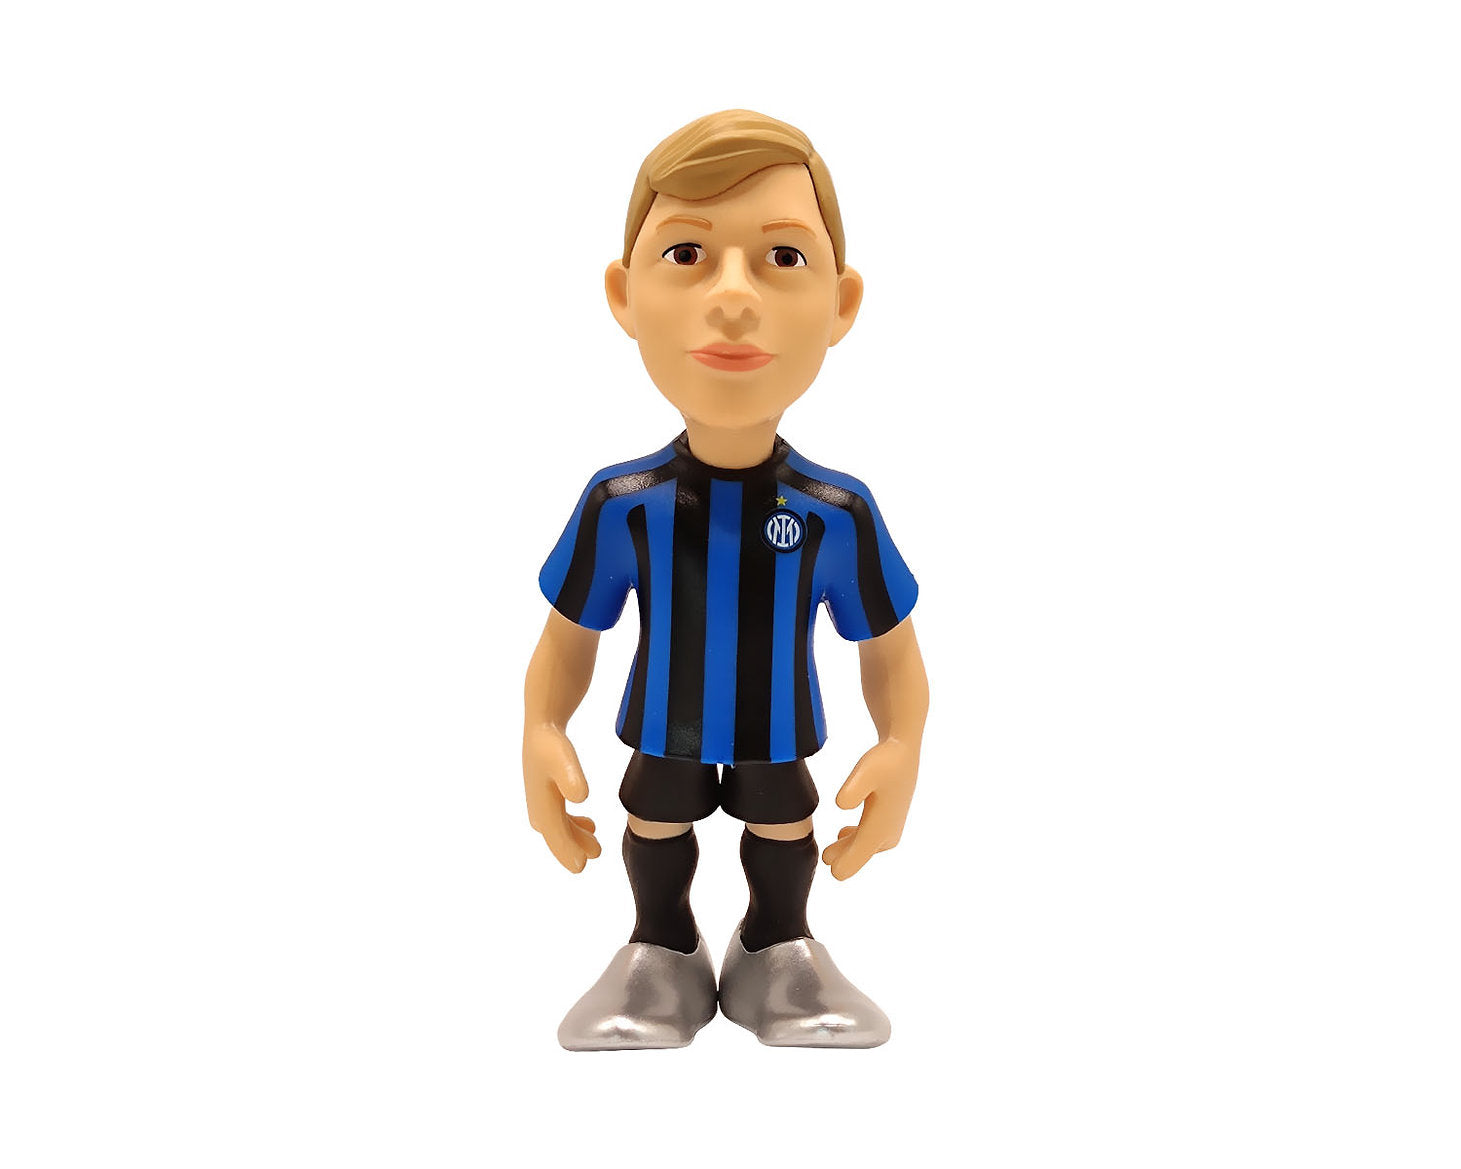 Minix -Football -INTER MILAN -23 NICOLO BARELLA -Figurine -12 cm